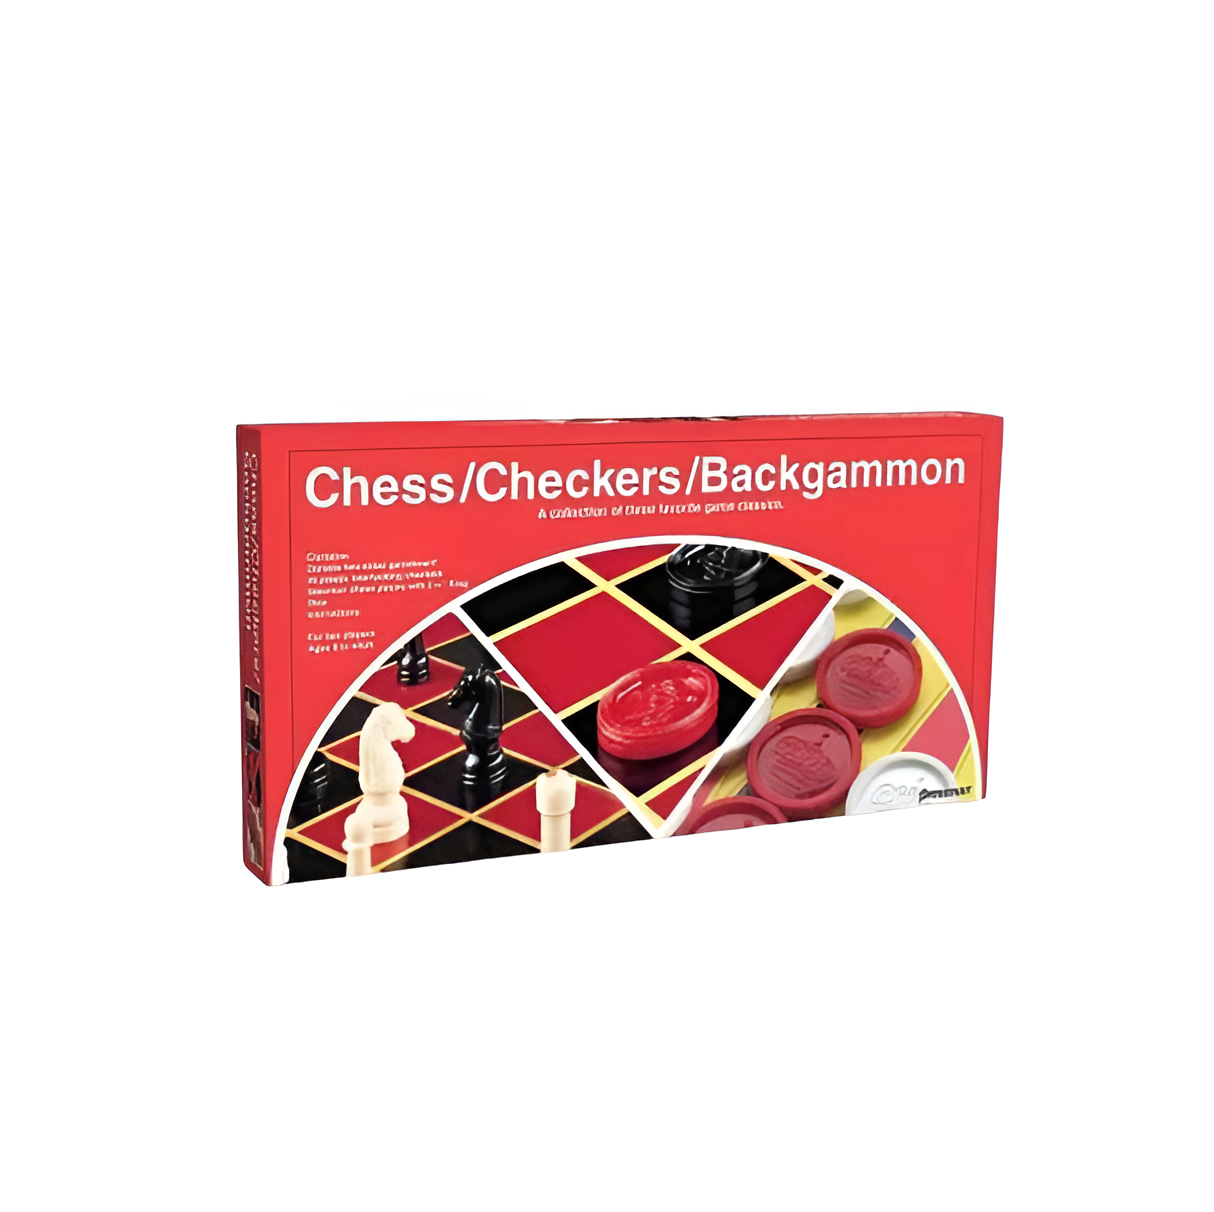 Checkers/Chess/Backgammon (8019091)